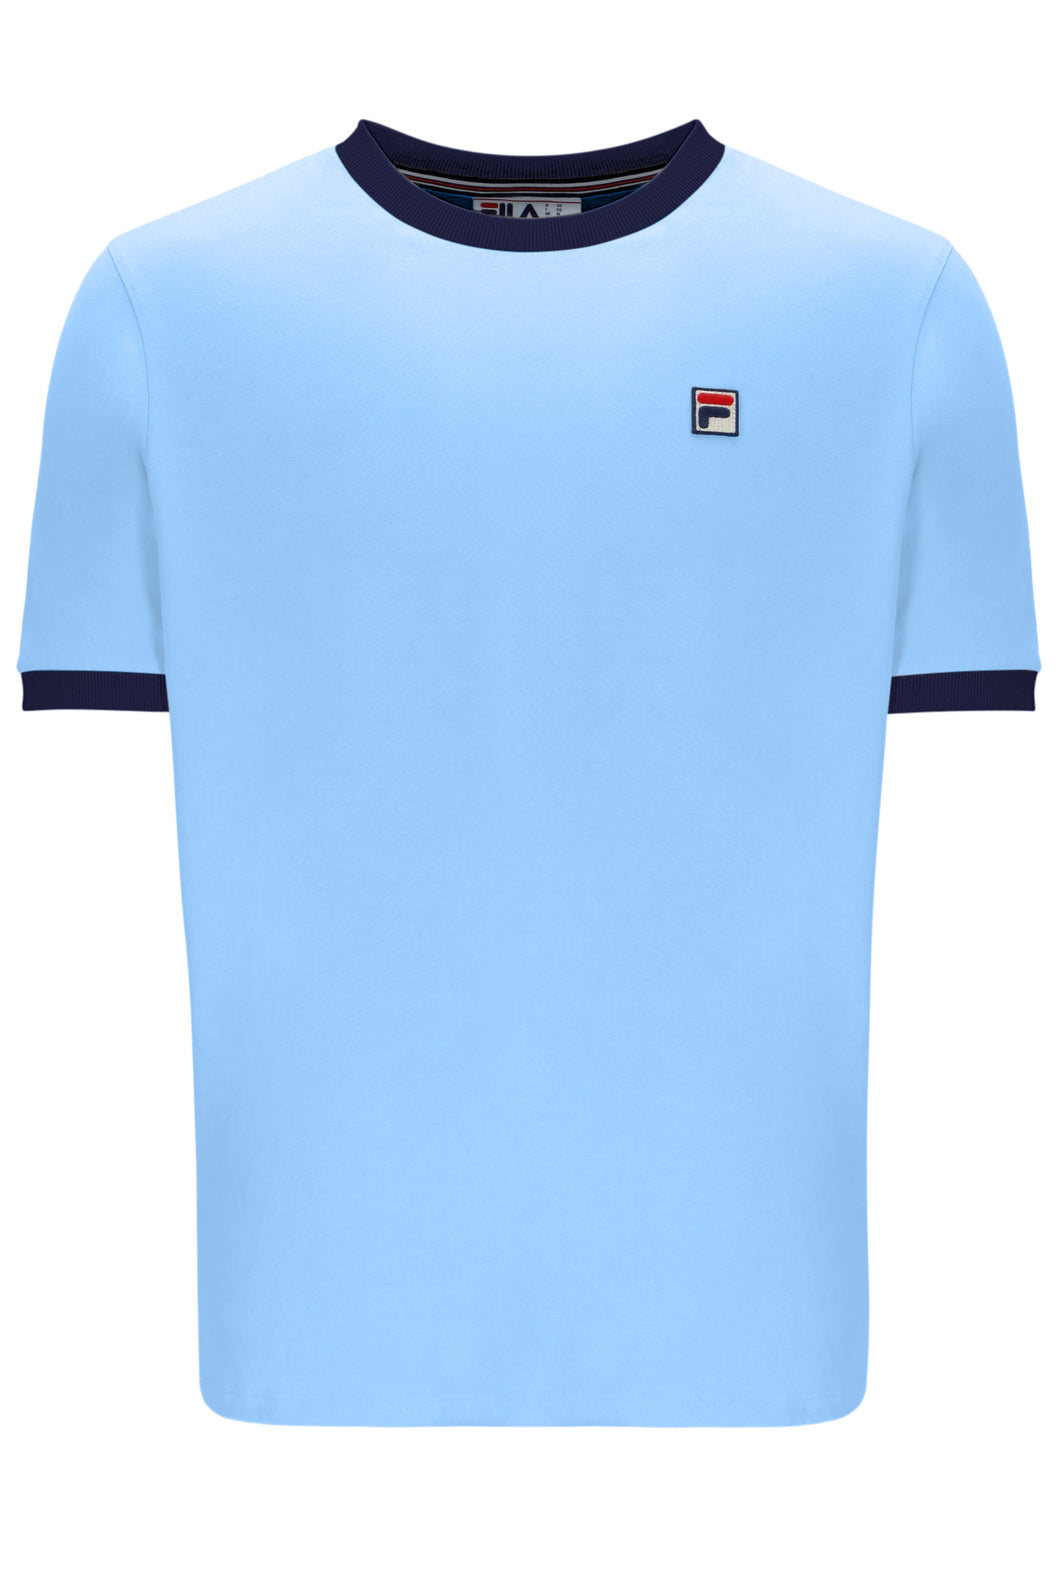 Fila Marconi T-Shirt Blue Bell